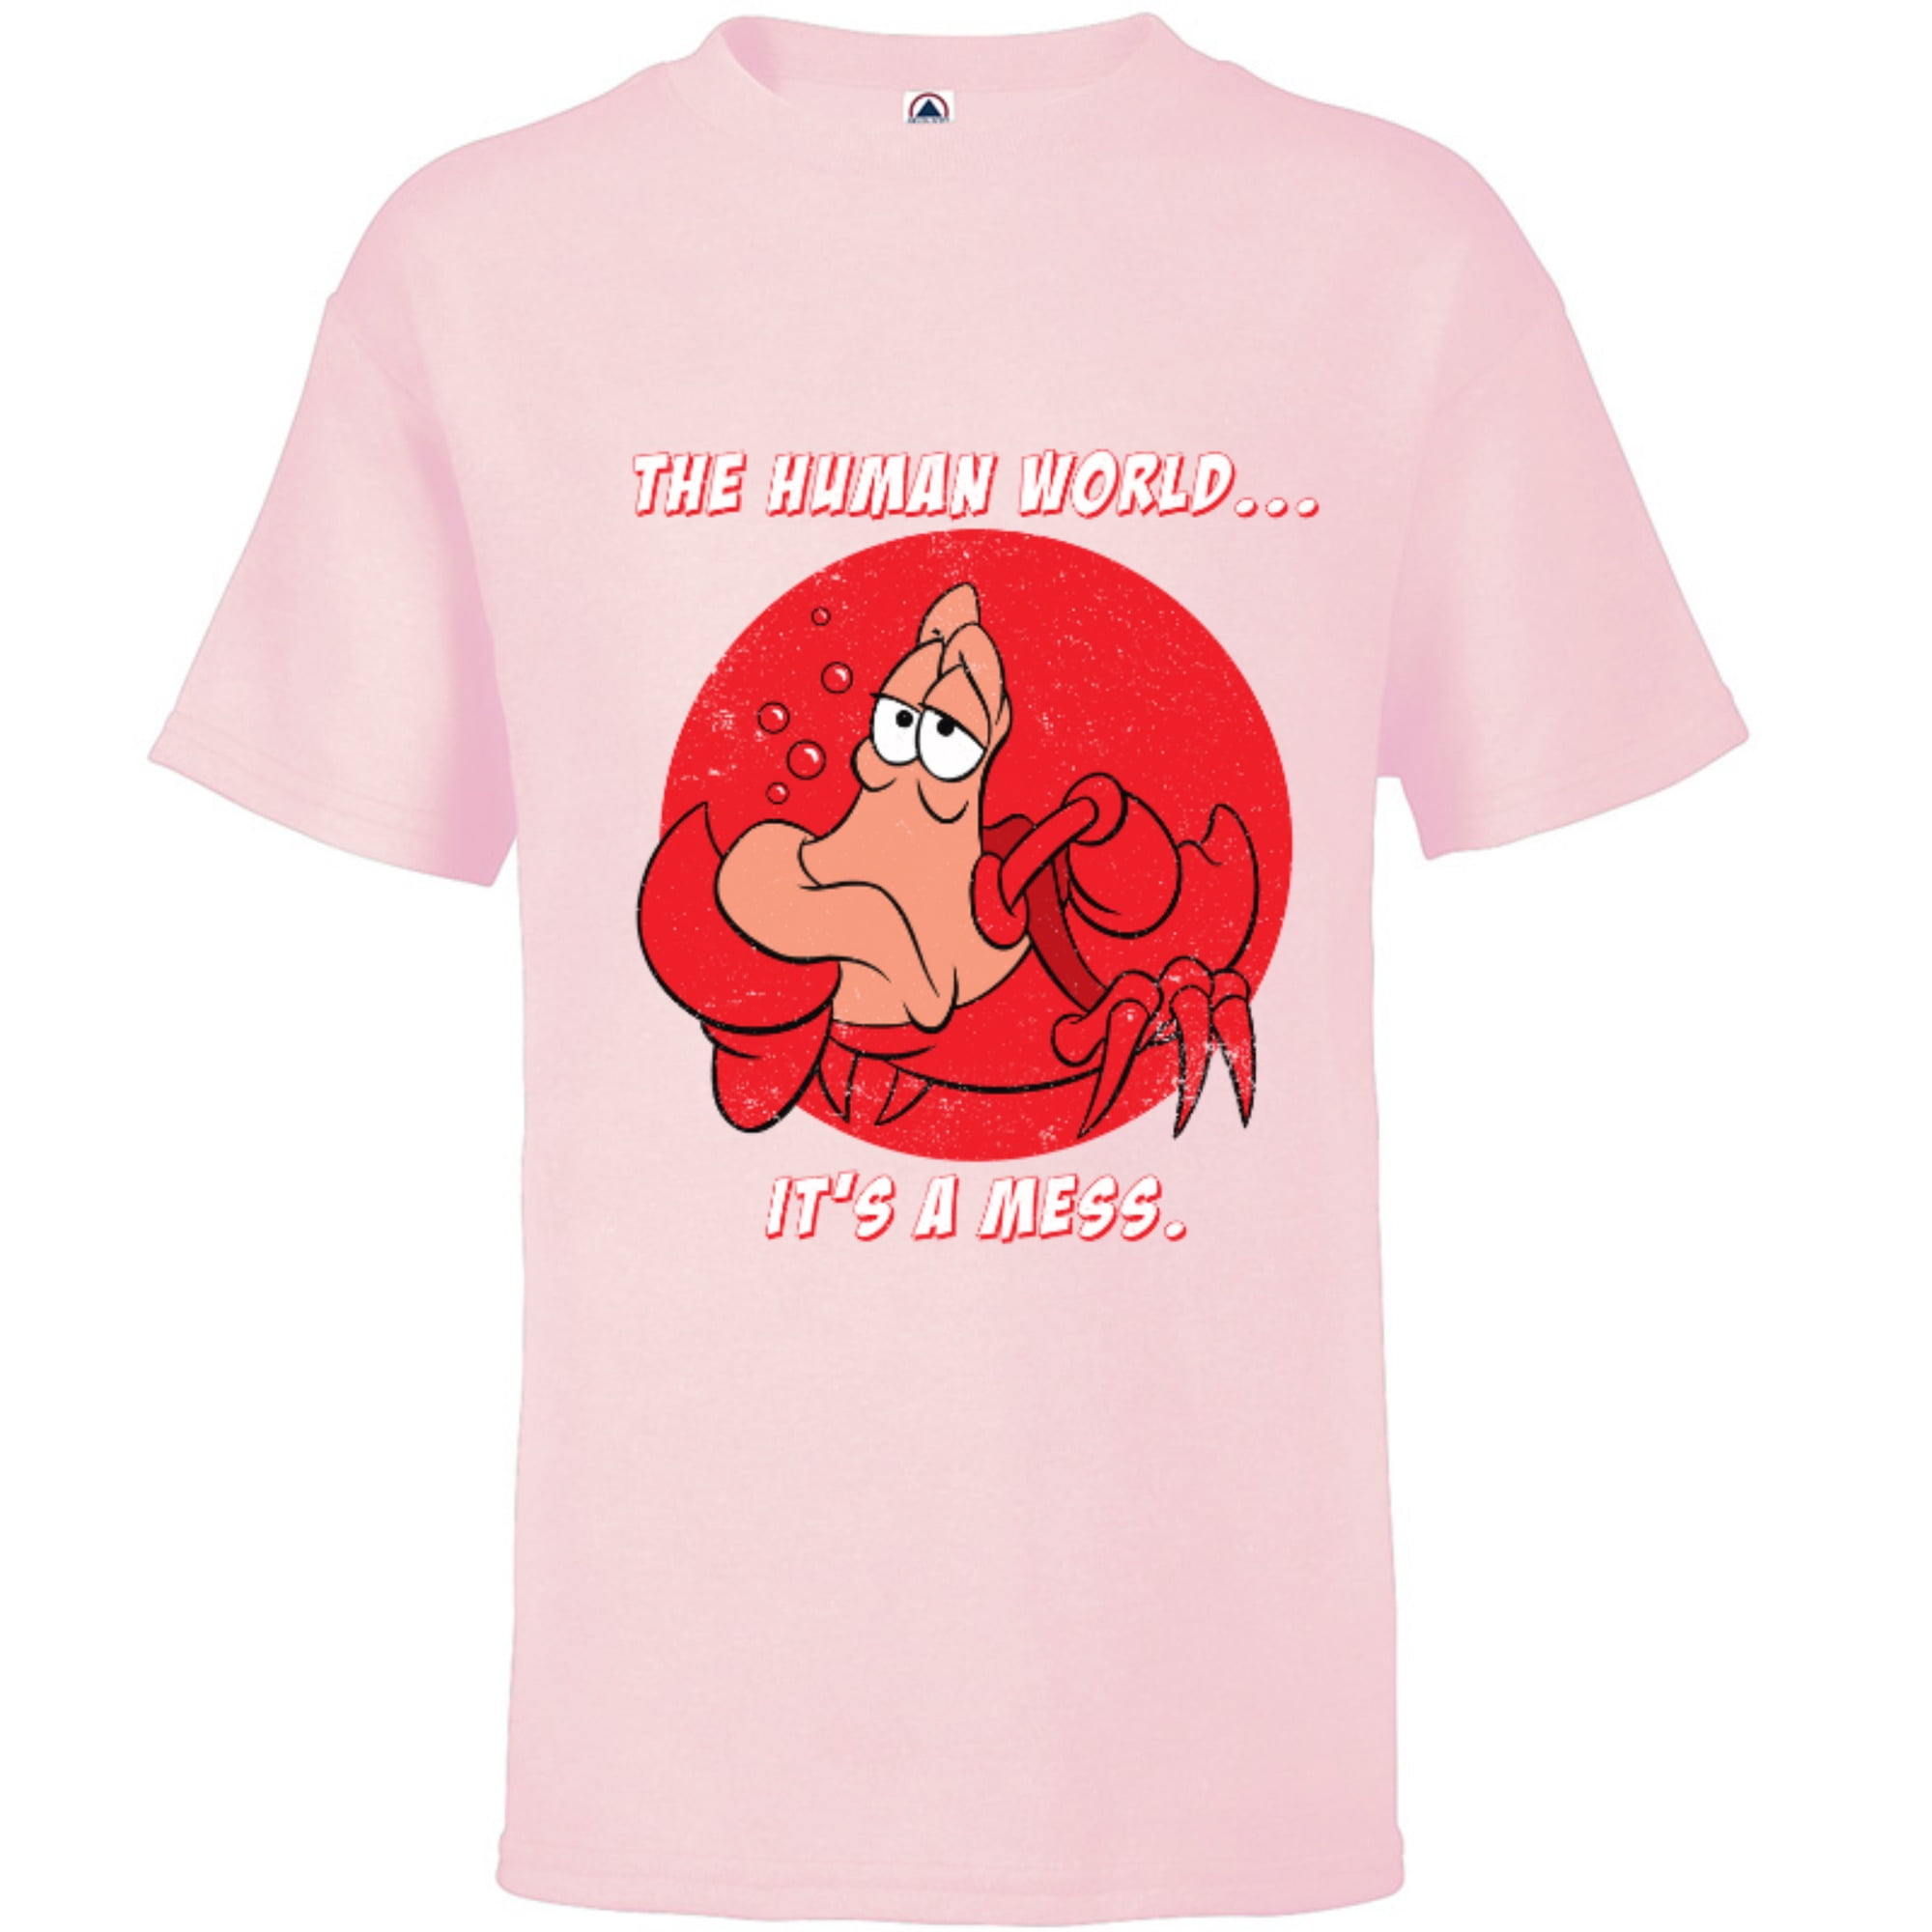 Disney The Little Mermaid Sebastian -Shirt - Kids for World The - T-Shirt Customized-Athletic Short Sleeve T Heather Human